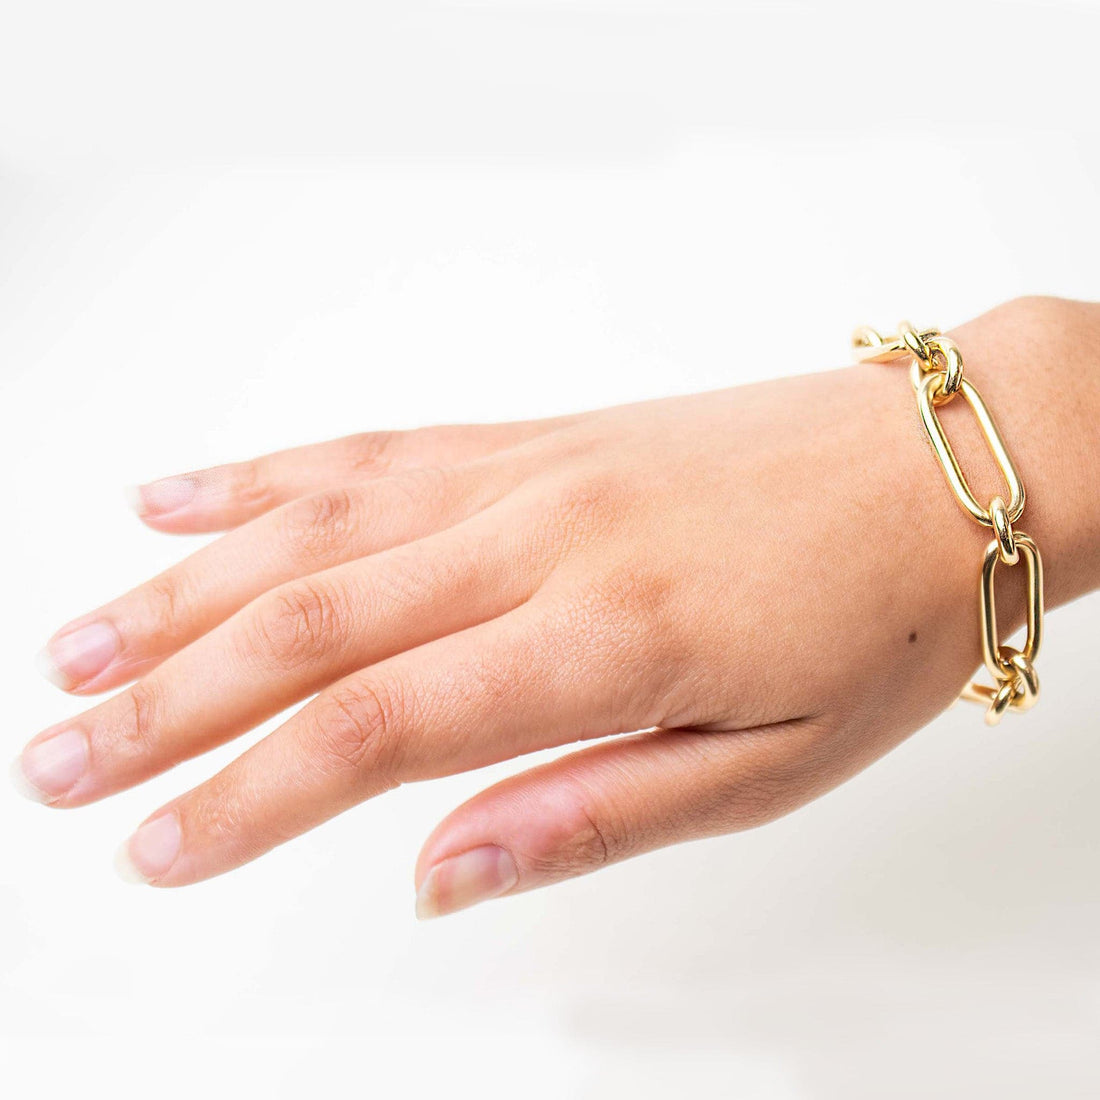 Roberto Coin Oro Classic Bracelet Yellow Gold Chain Links - Skeie's Jewelers